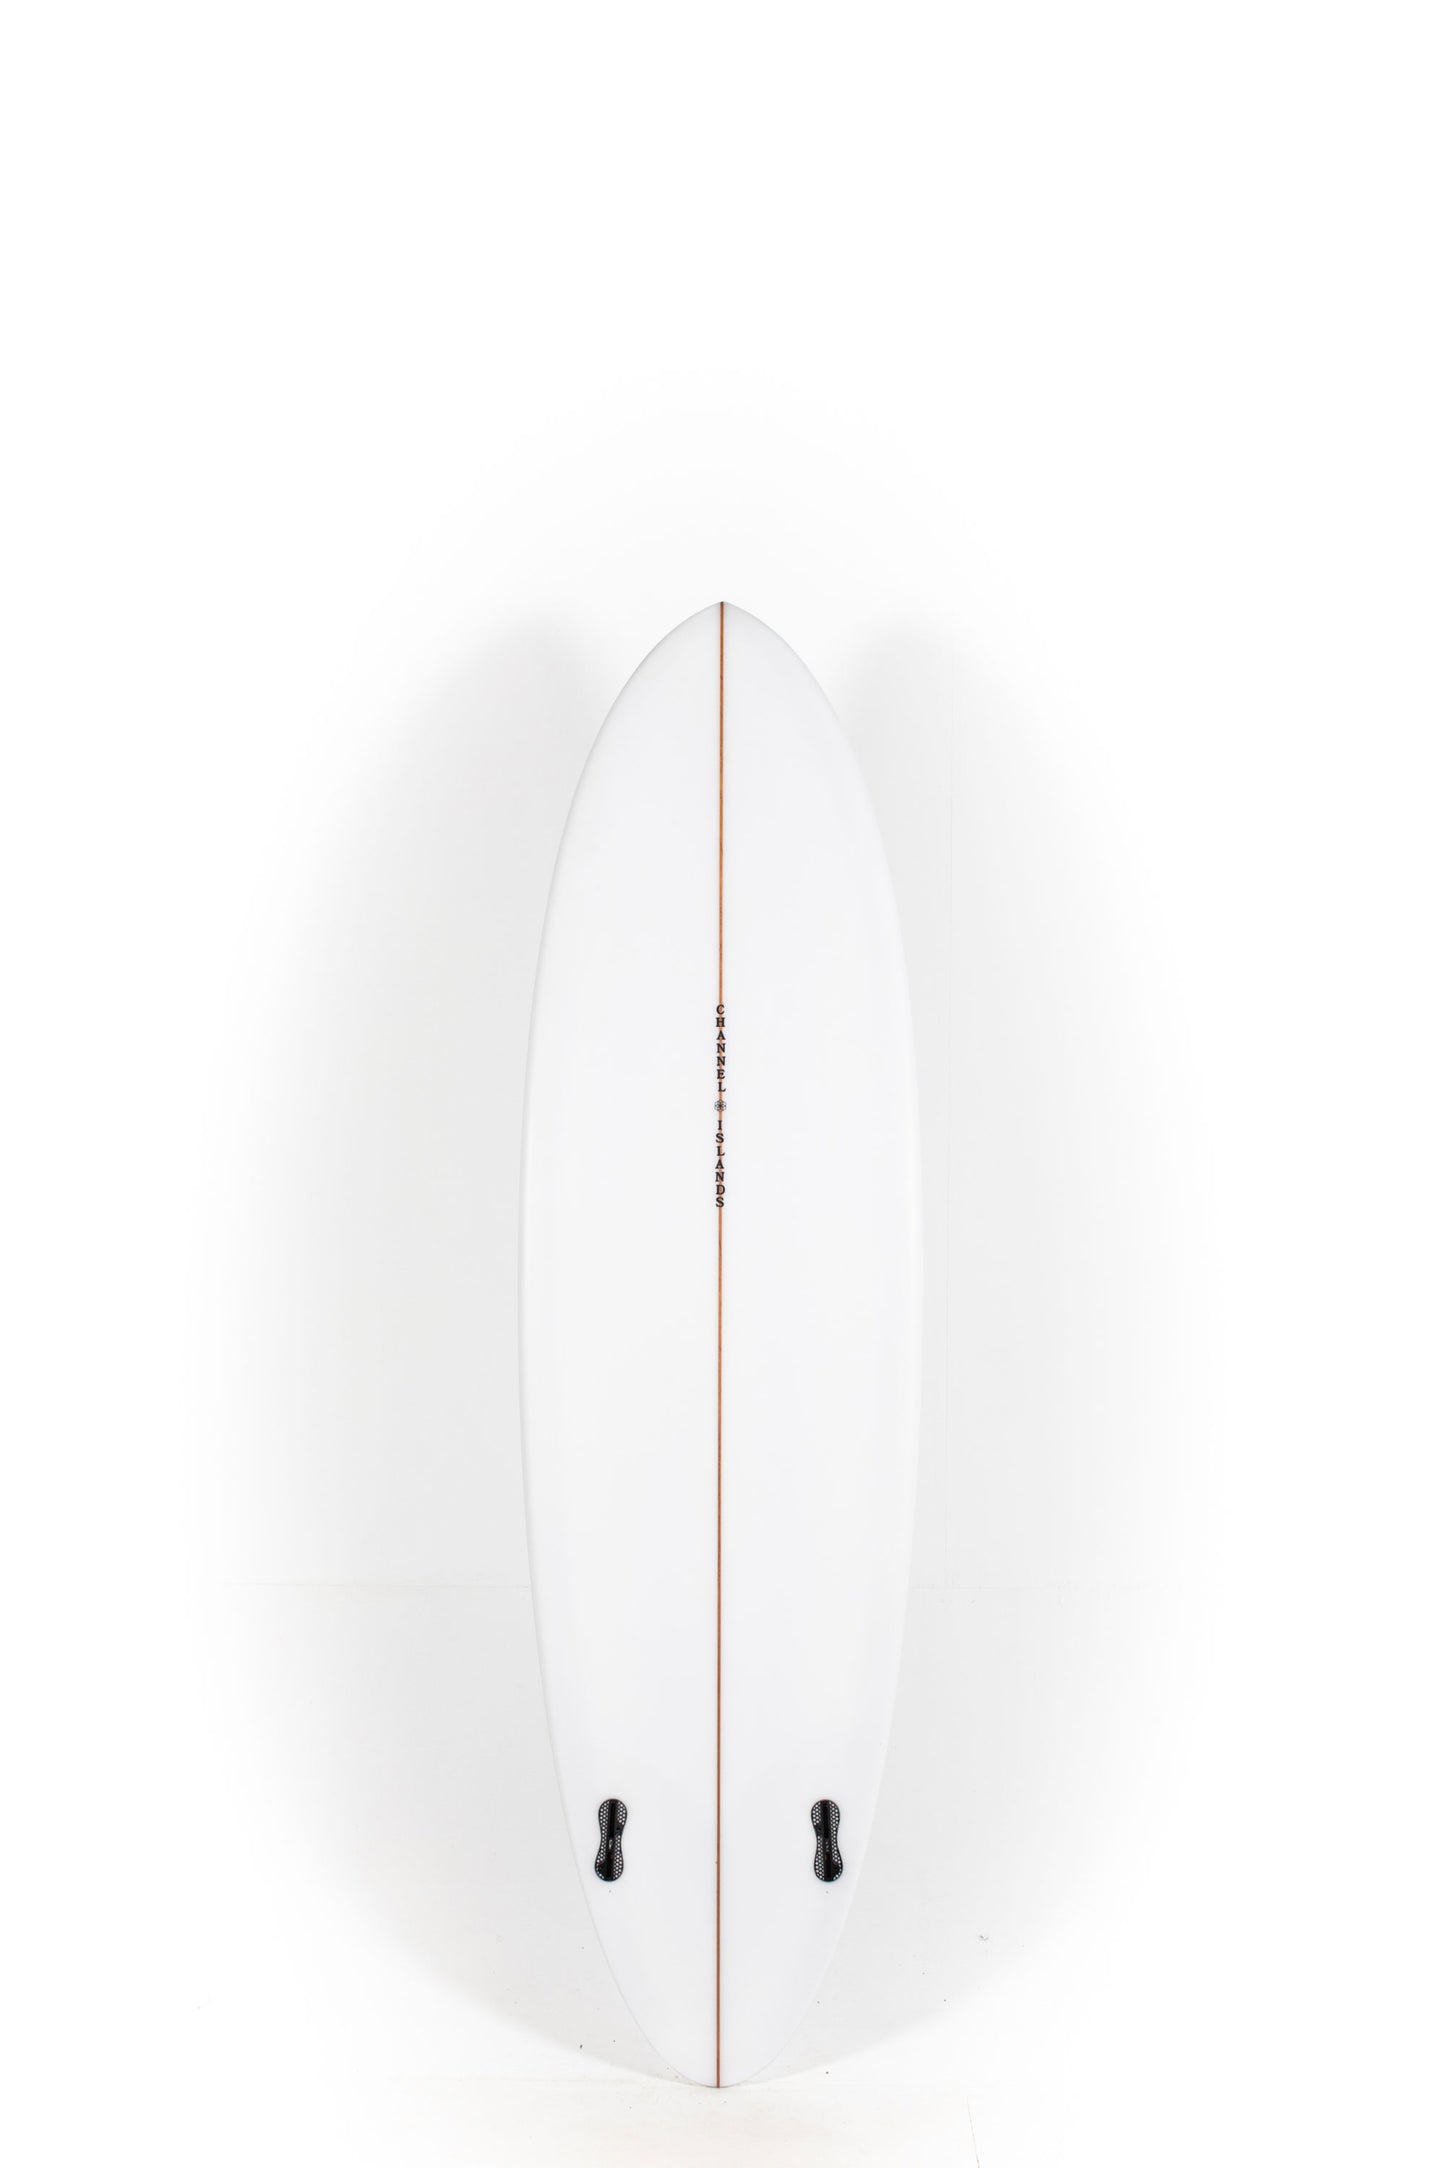 
                  
                    Pukas Surf Shop - Channel Islands - CI MID TWIN - 6'6" x 20 7/8 x 2 11/16 - 40,2L - CI27619
                  
                